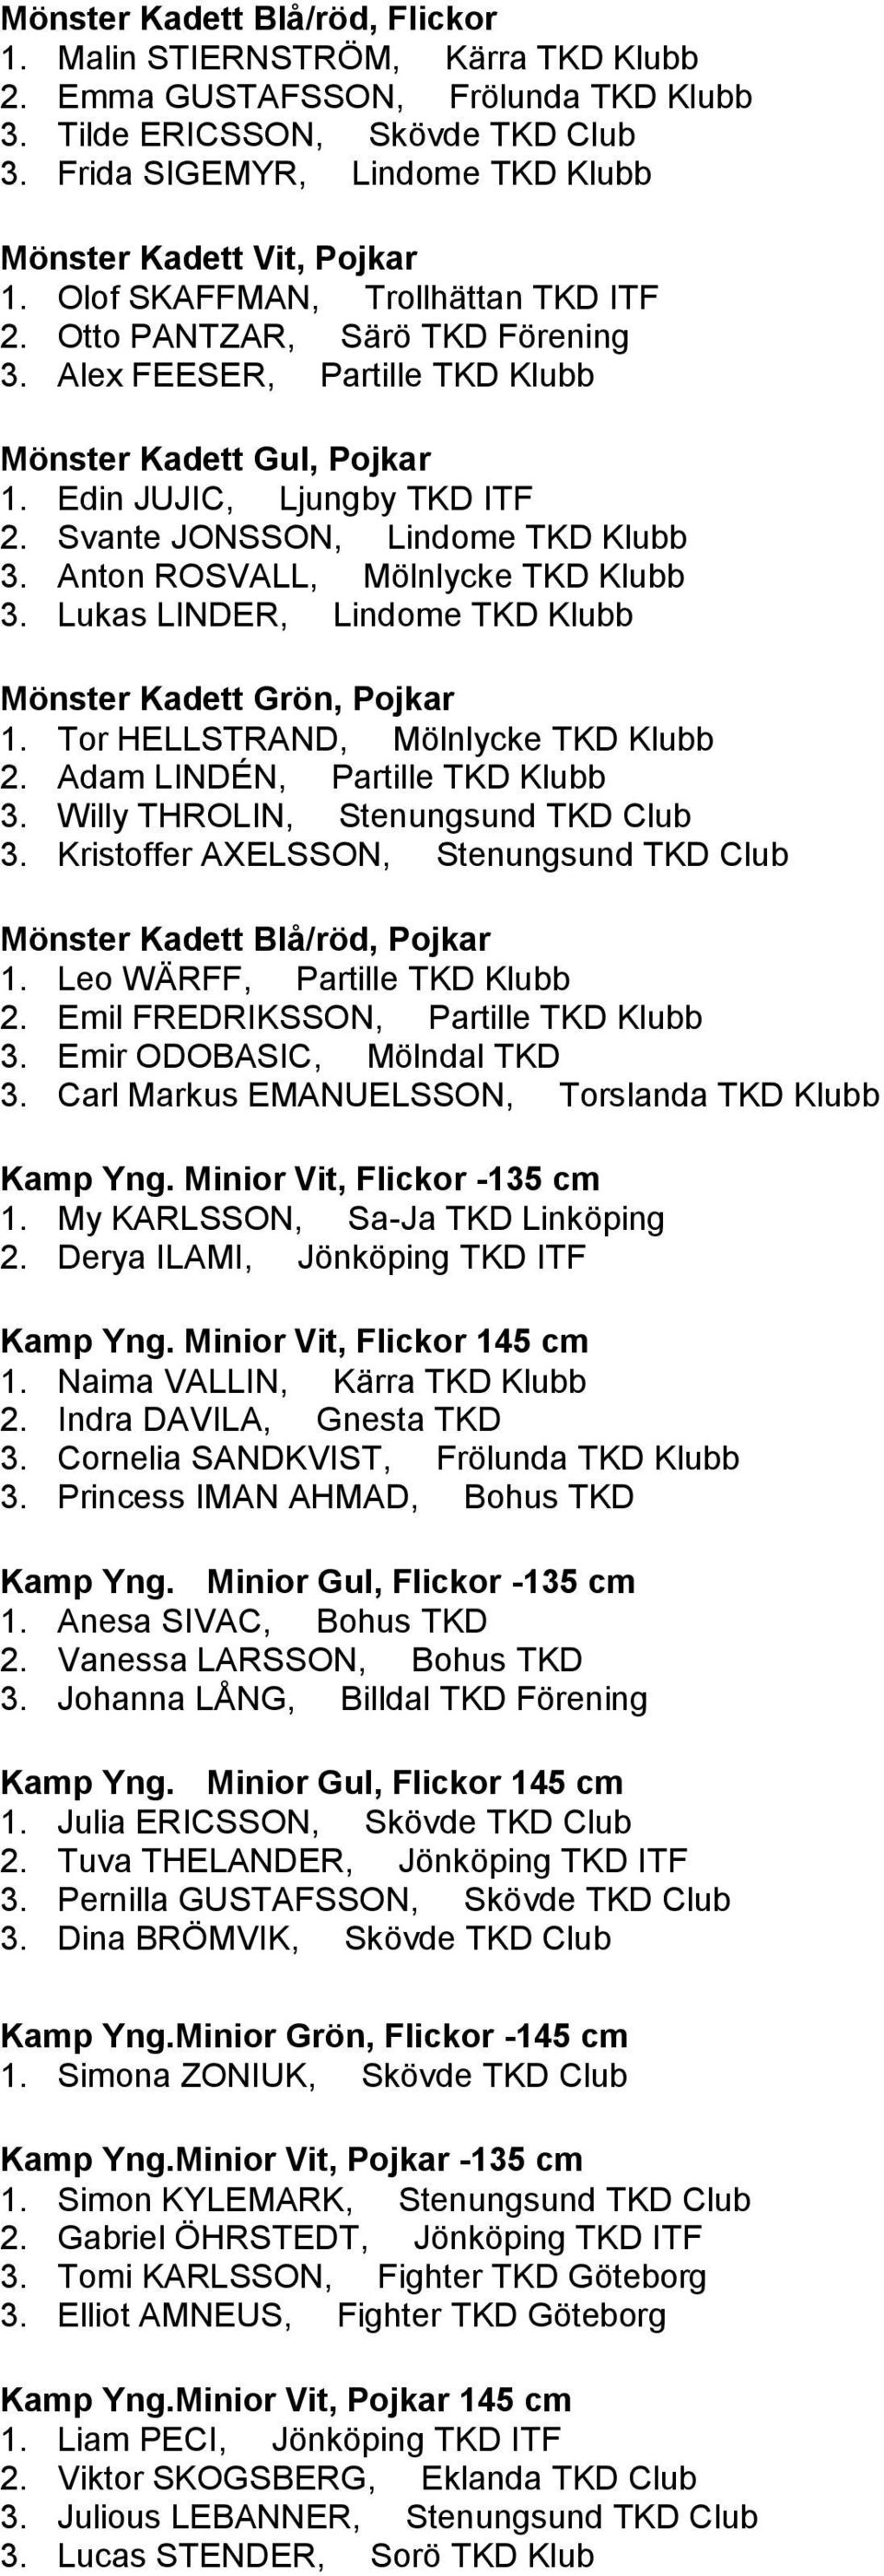 Edin JUJIC, Ljungby TKD ITF 2. Svante JONSSON, Lindome TKD Klubb 3. Anton ROSVALL, Mölnlycke TKD Klubb 3. Lukas LINDER, Lindome TKD Klubb Mönster Kadett Grön, Pojkar 1.